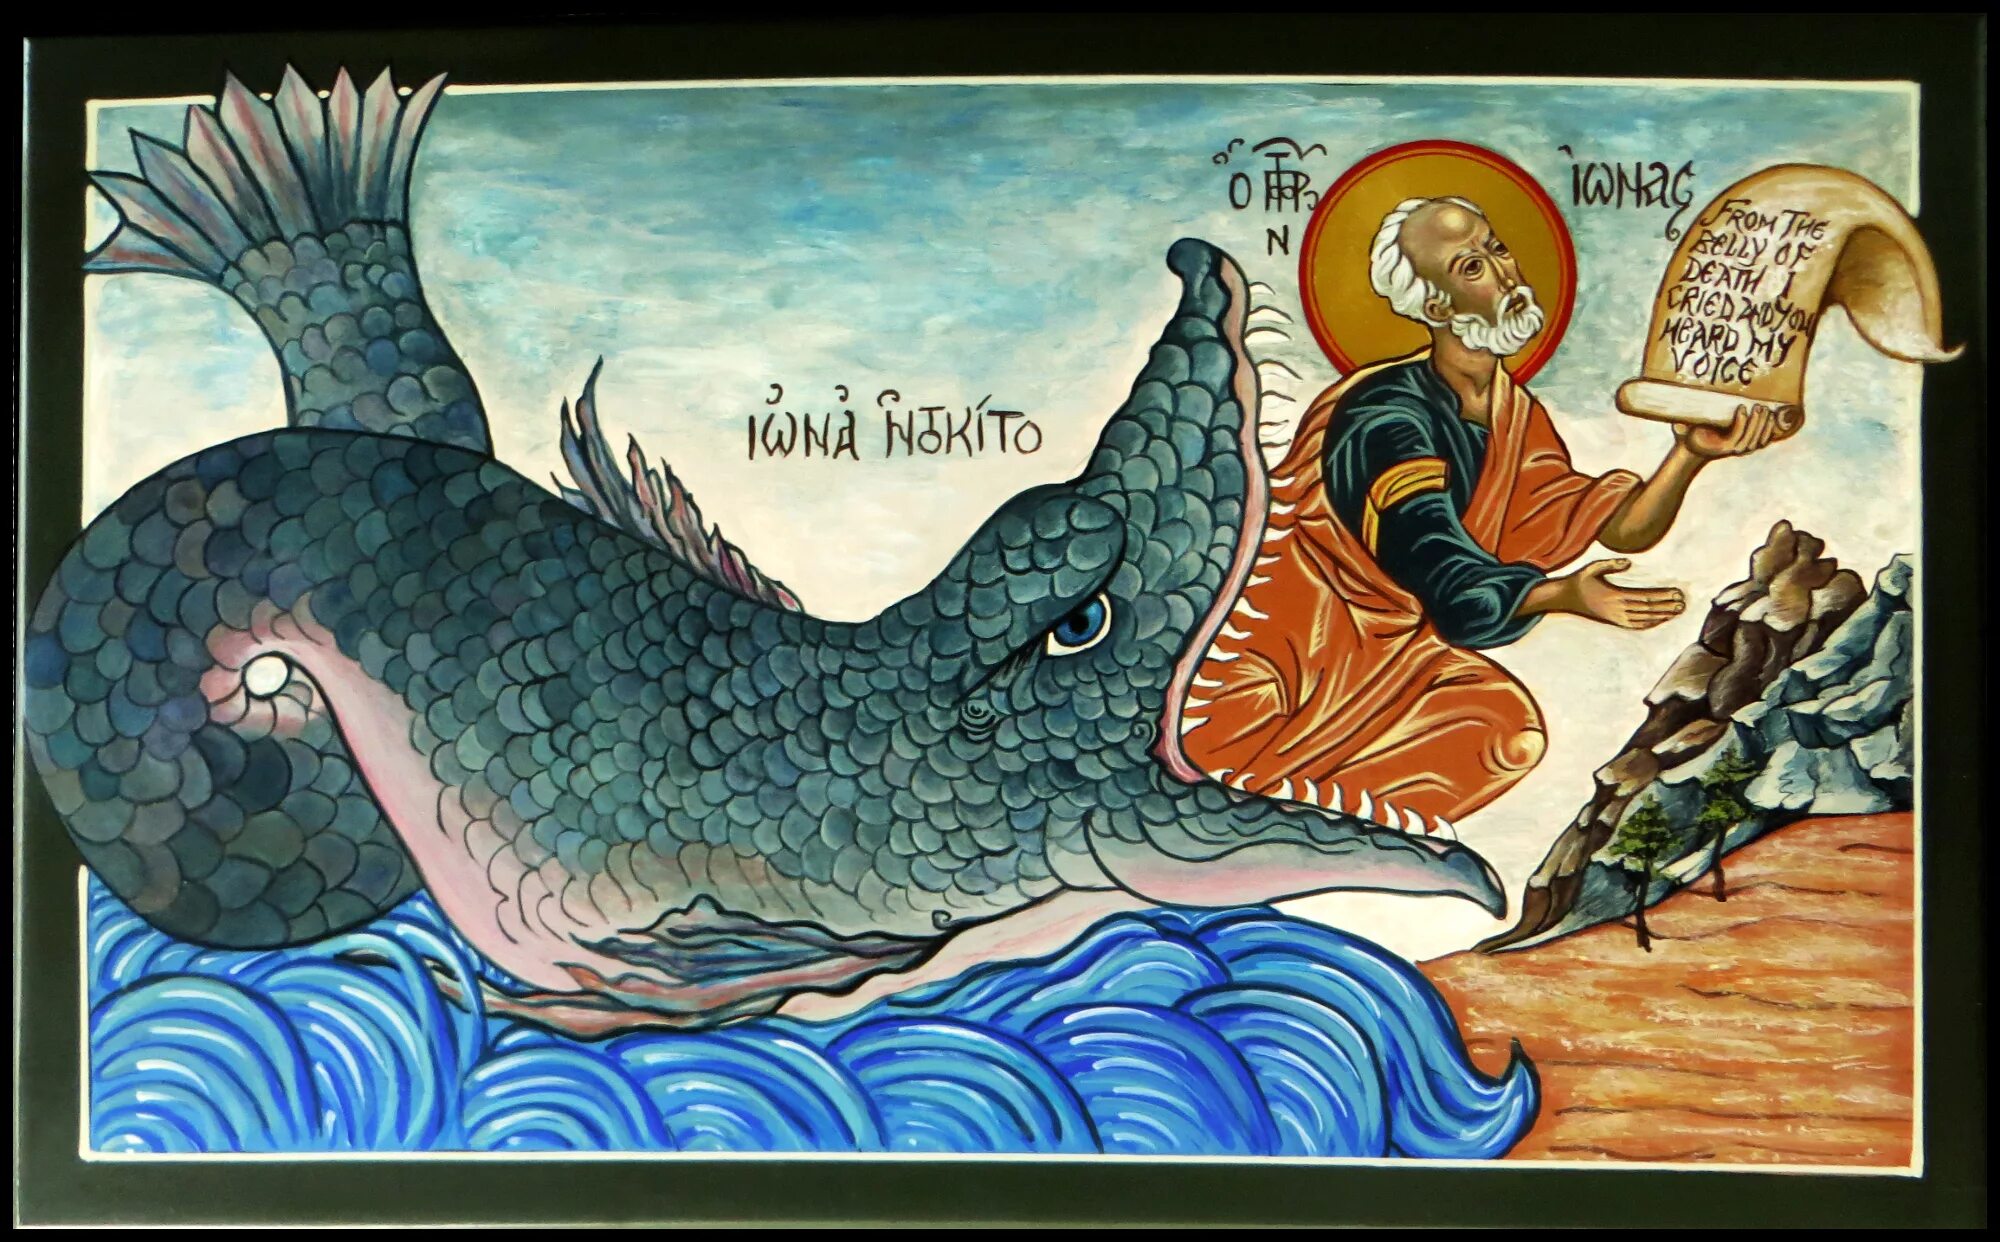 Библейский пророк в чреве кита. Пророк Иона во чреве кита икона. Иона пророк иконография. Святой пророк Иона. Святой Иона и кит.